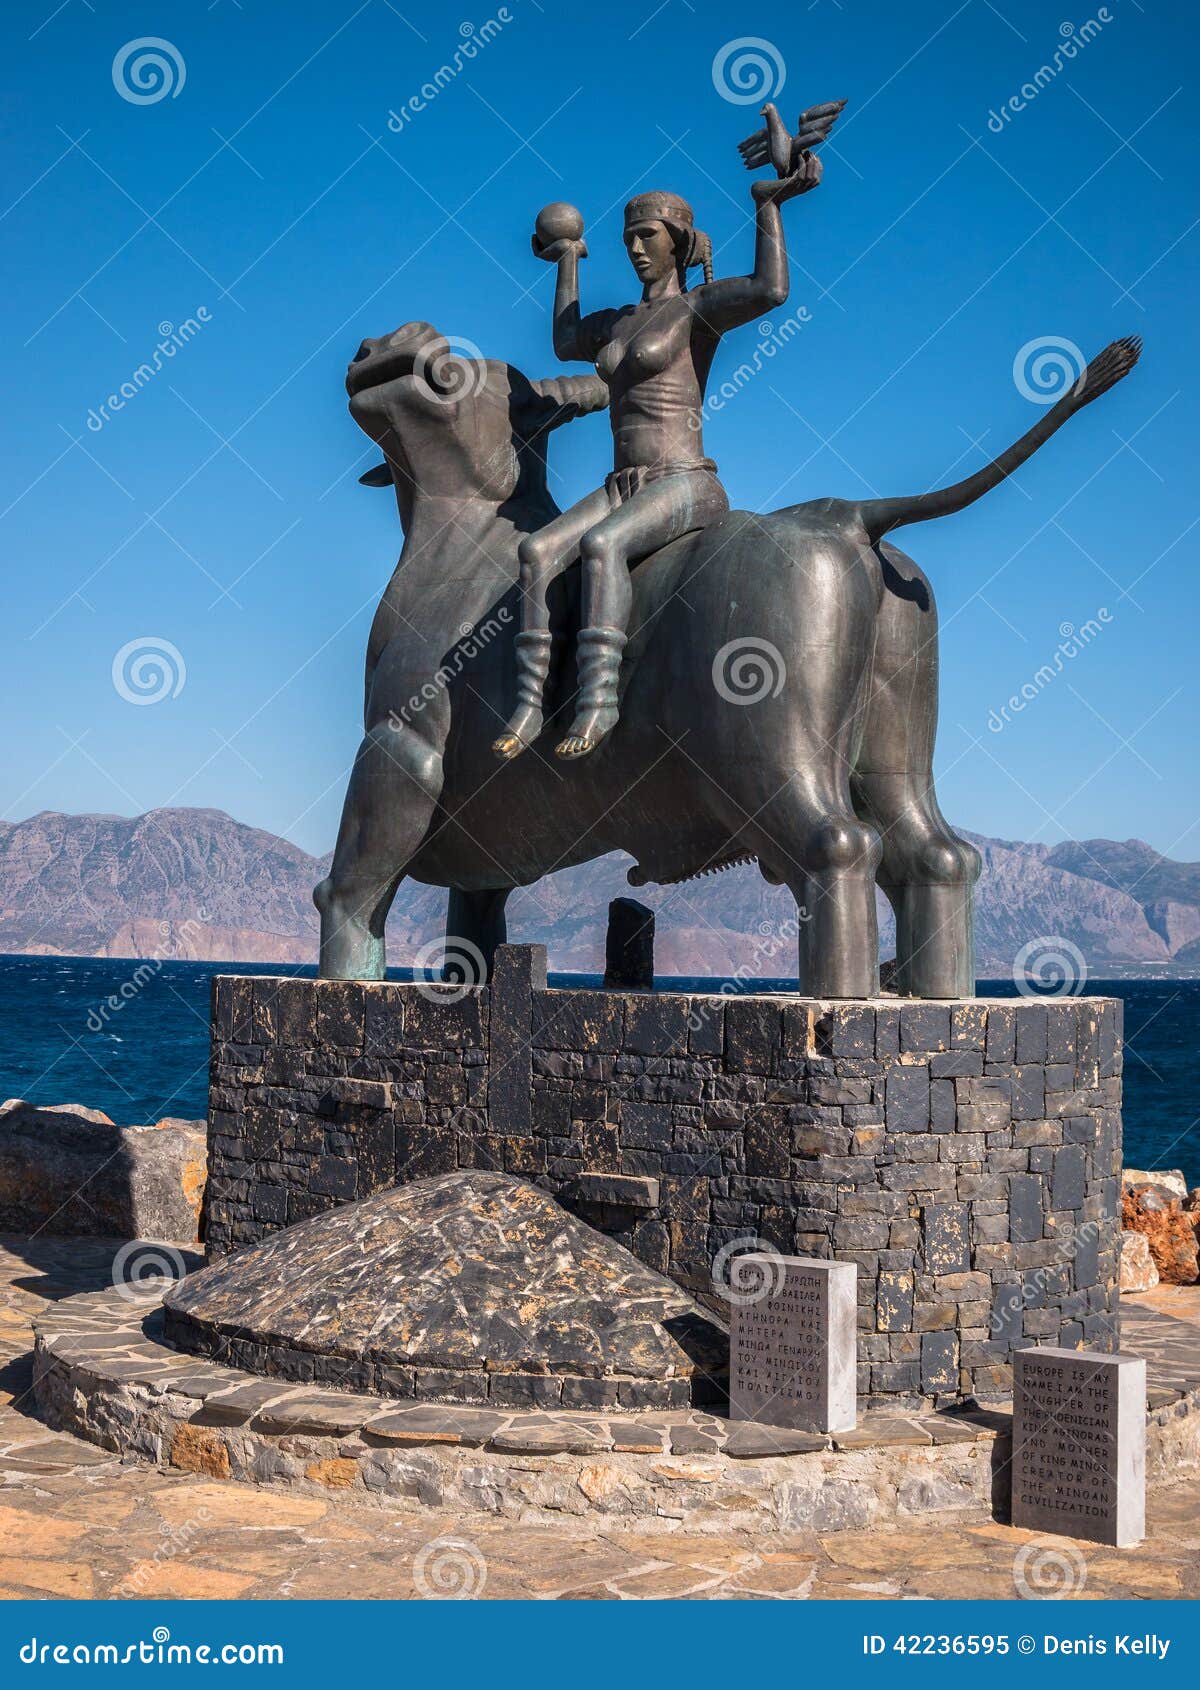 europa statue in agios nikolaos, crete, greece.